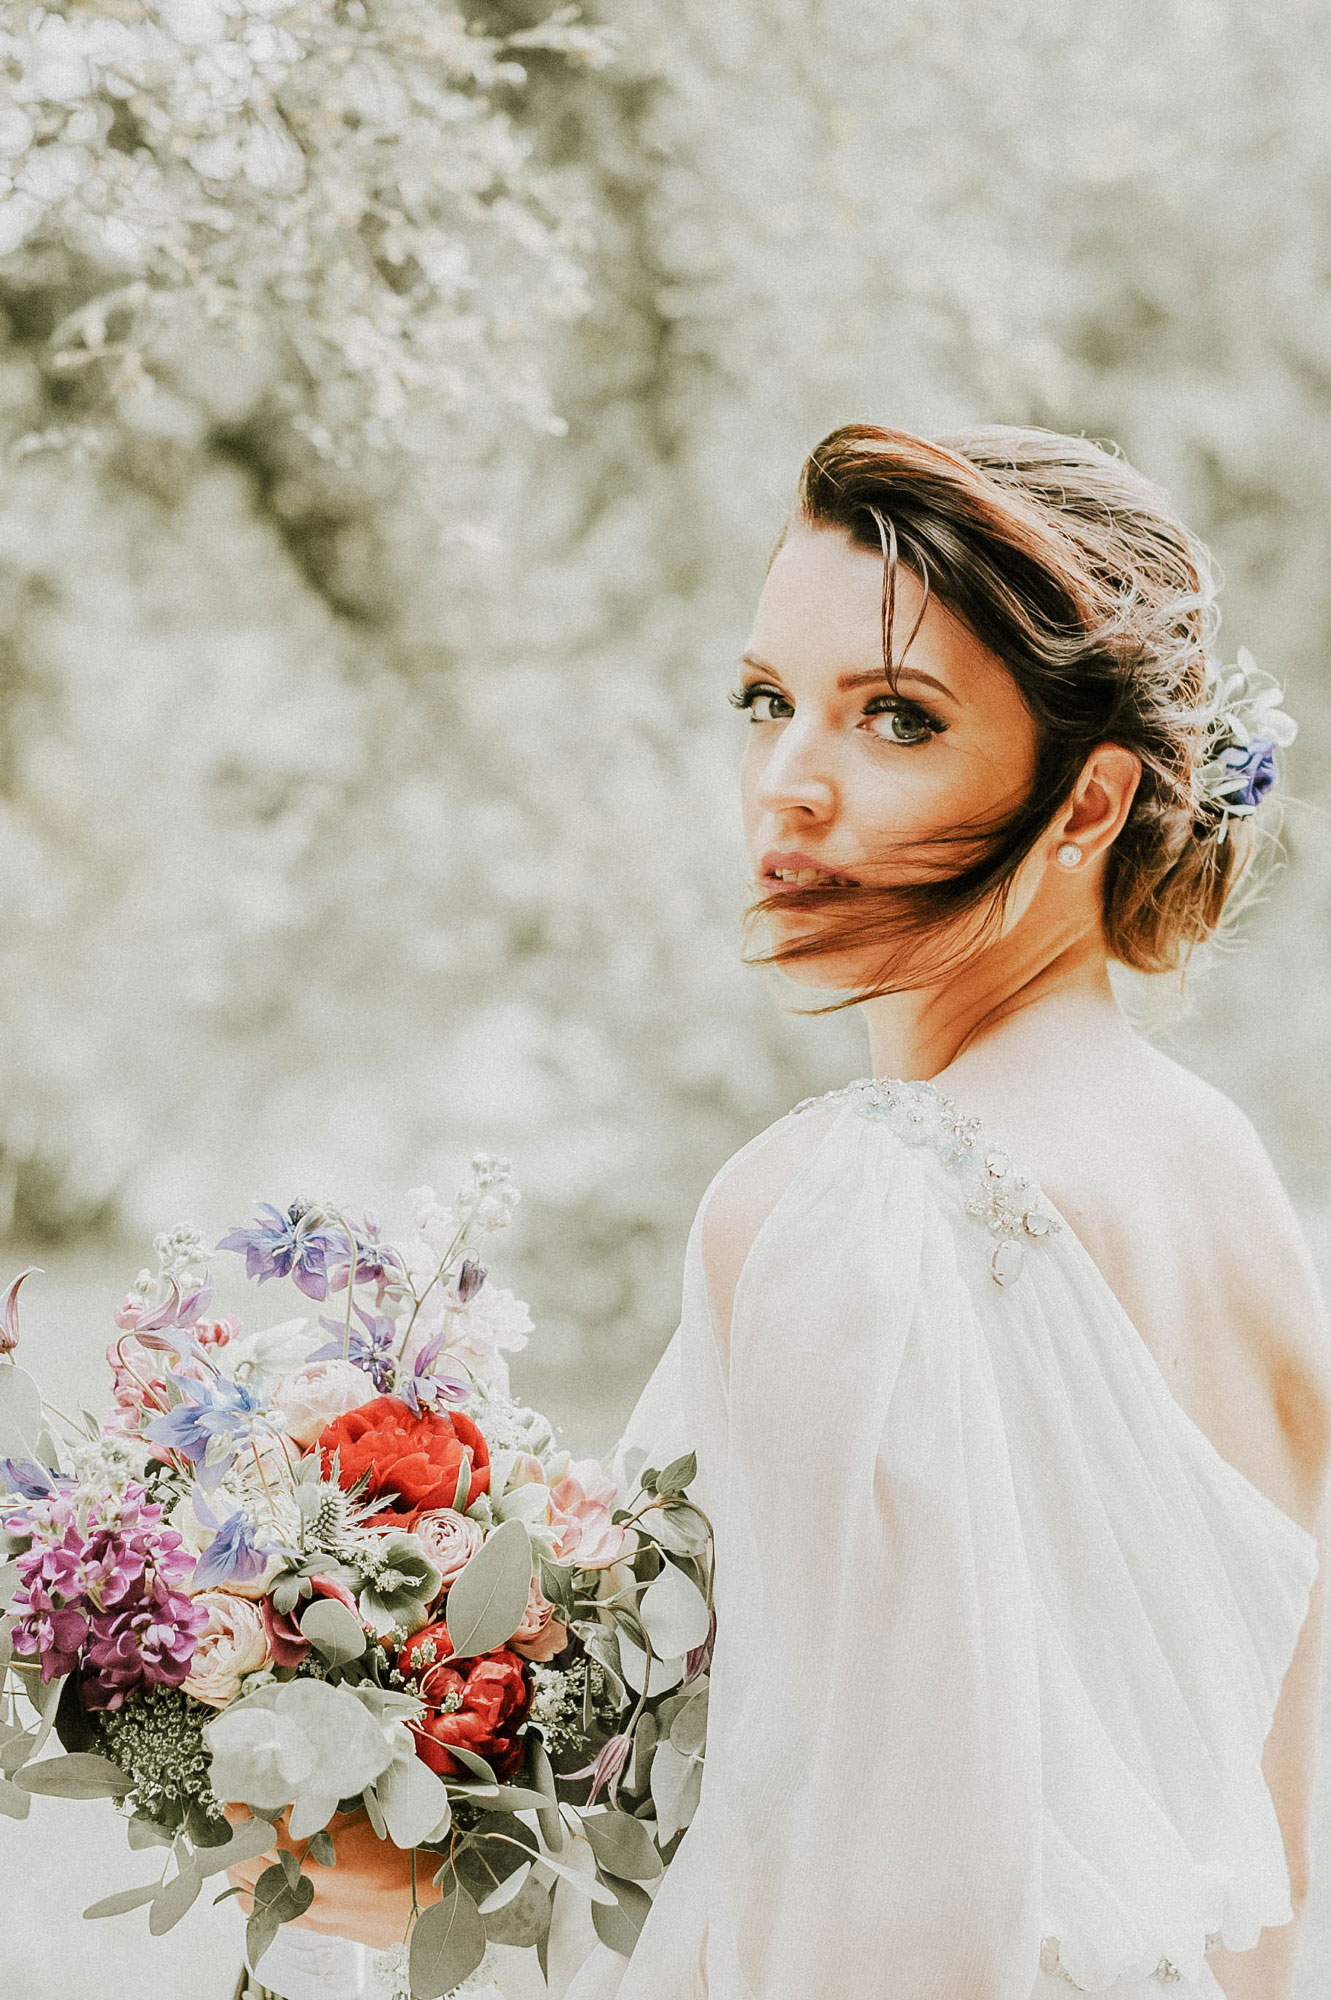 A bride with a bouquet